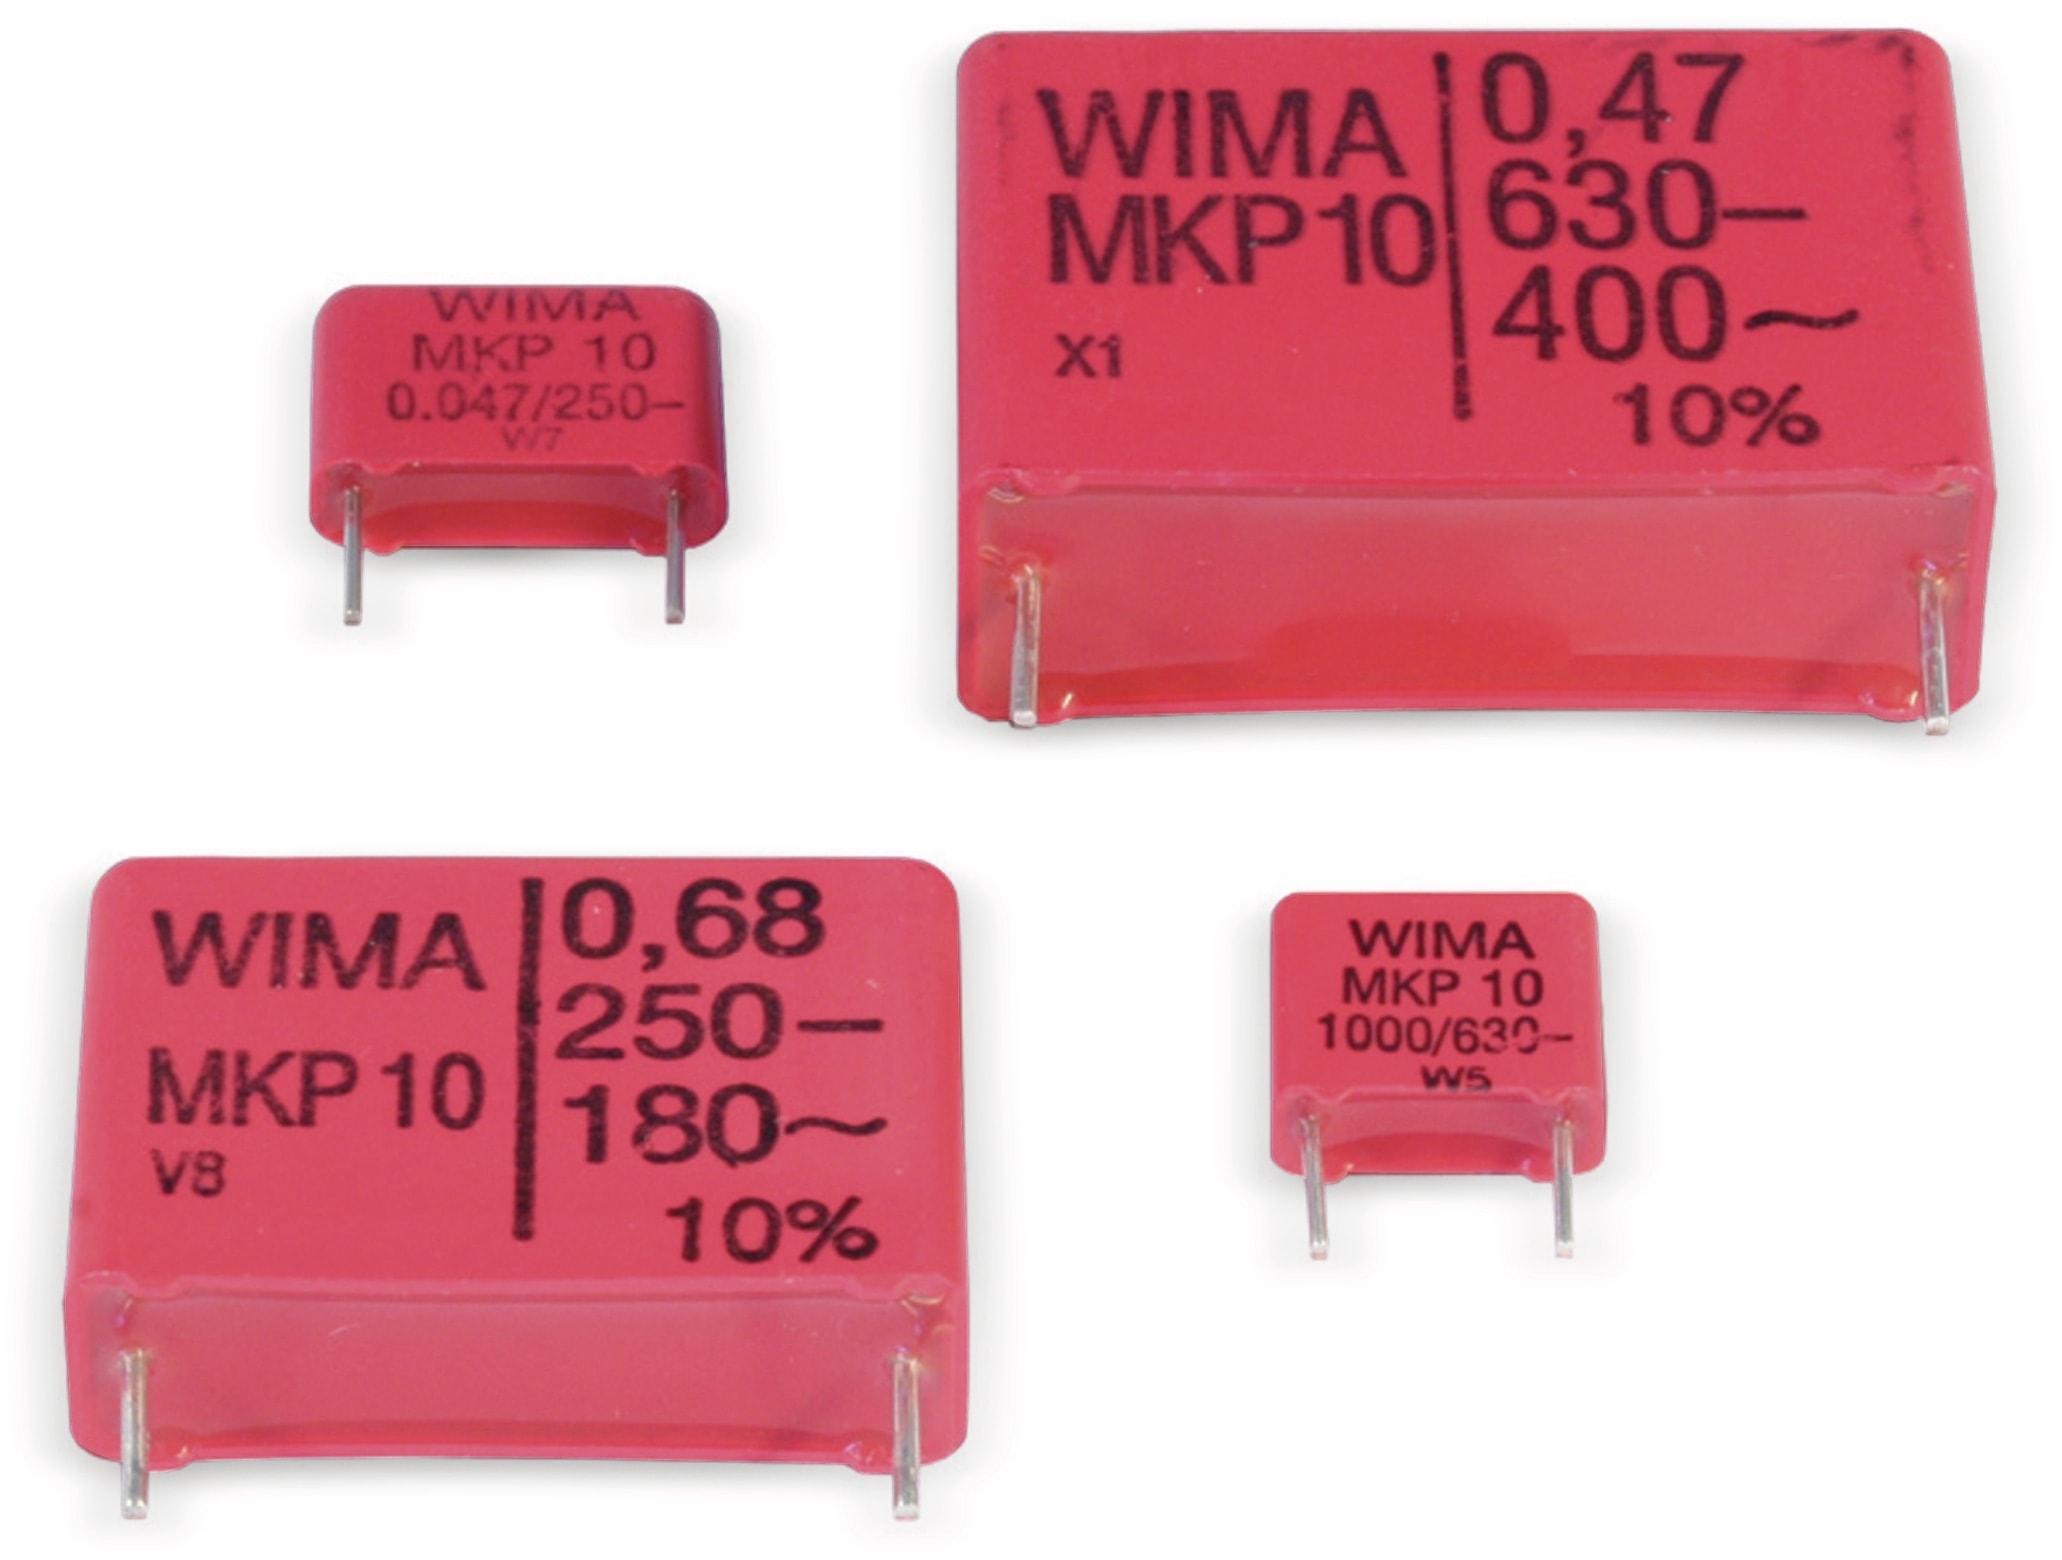 WIMA Folienkondensator, 1nF, 630V